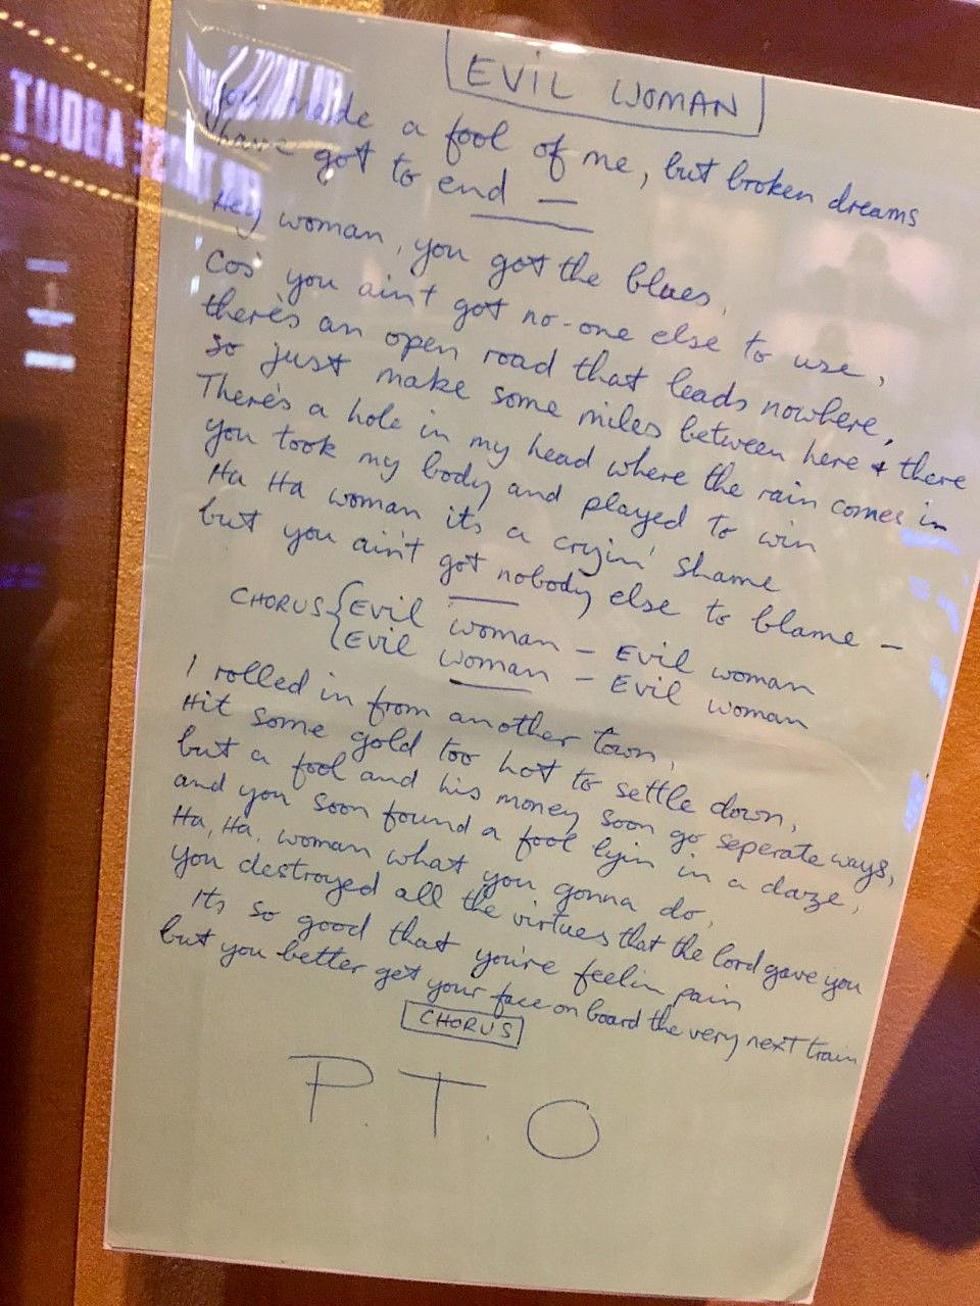 Gregg Rolie handwritten lyrics